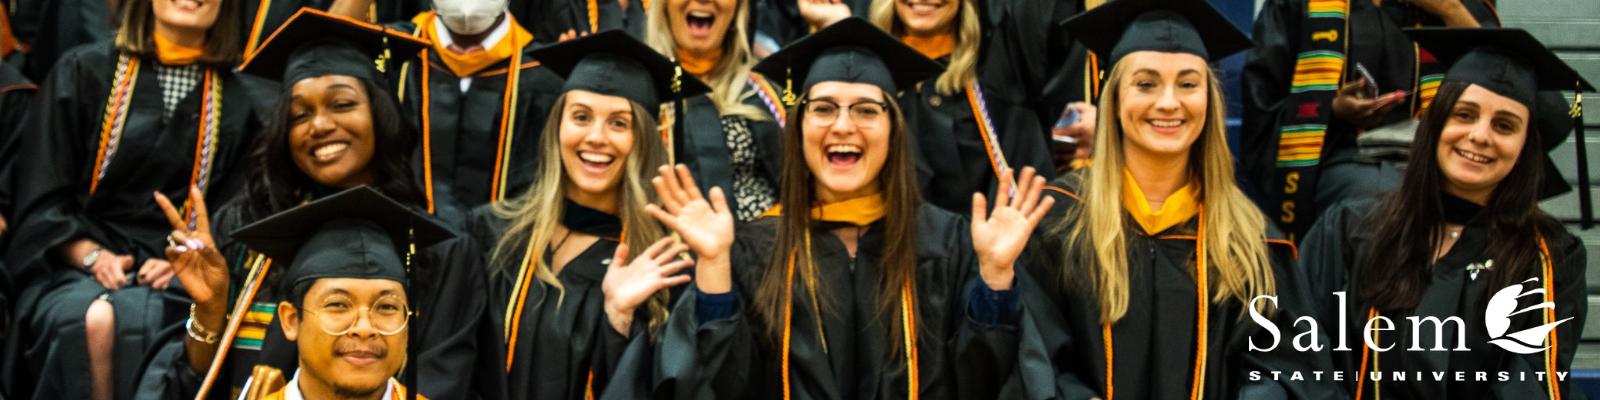 Salem State students smile at graduation.